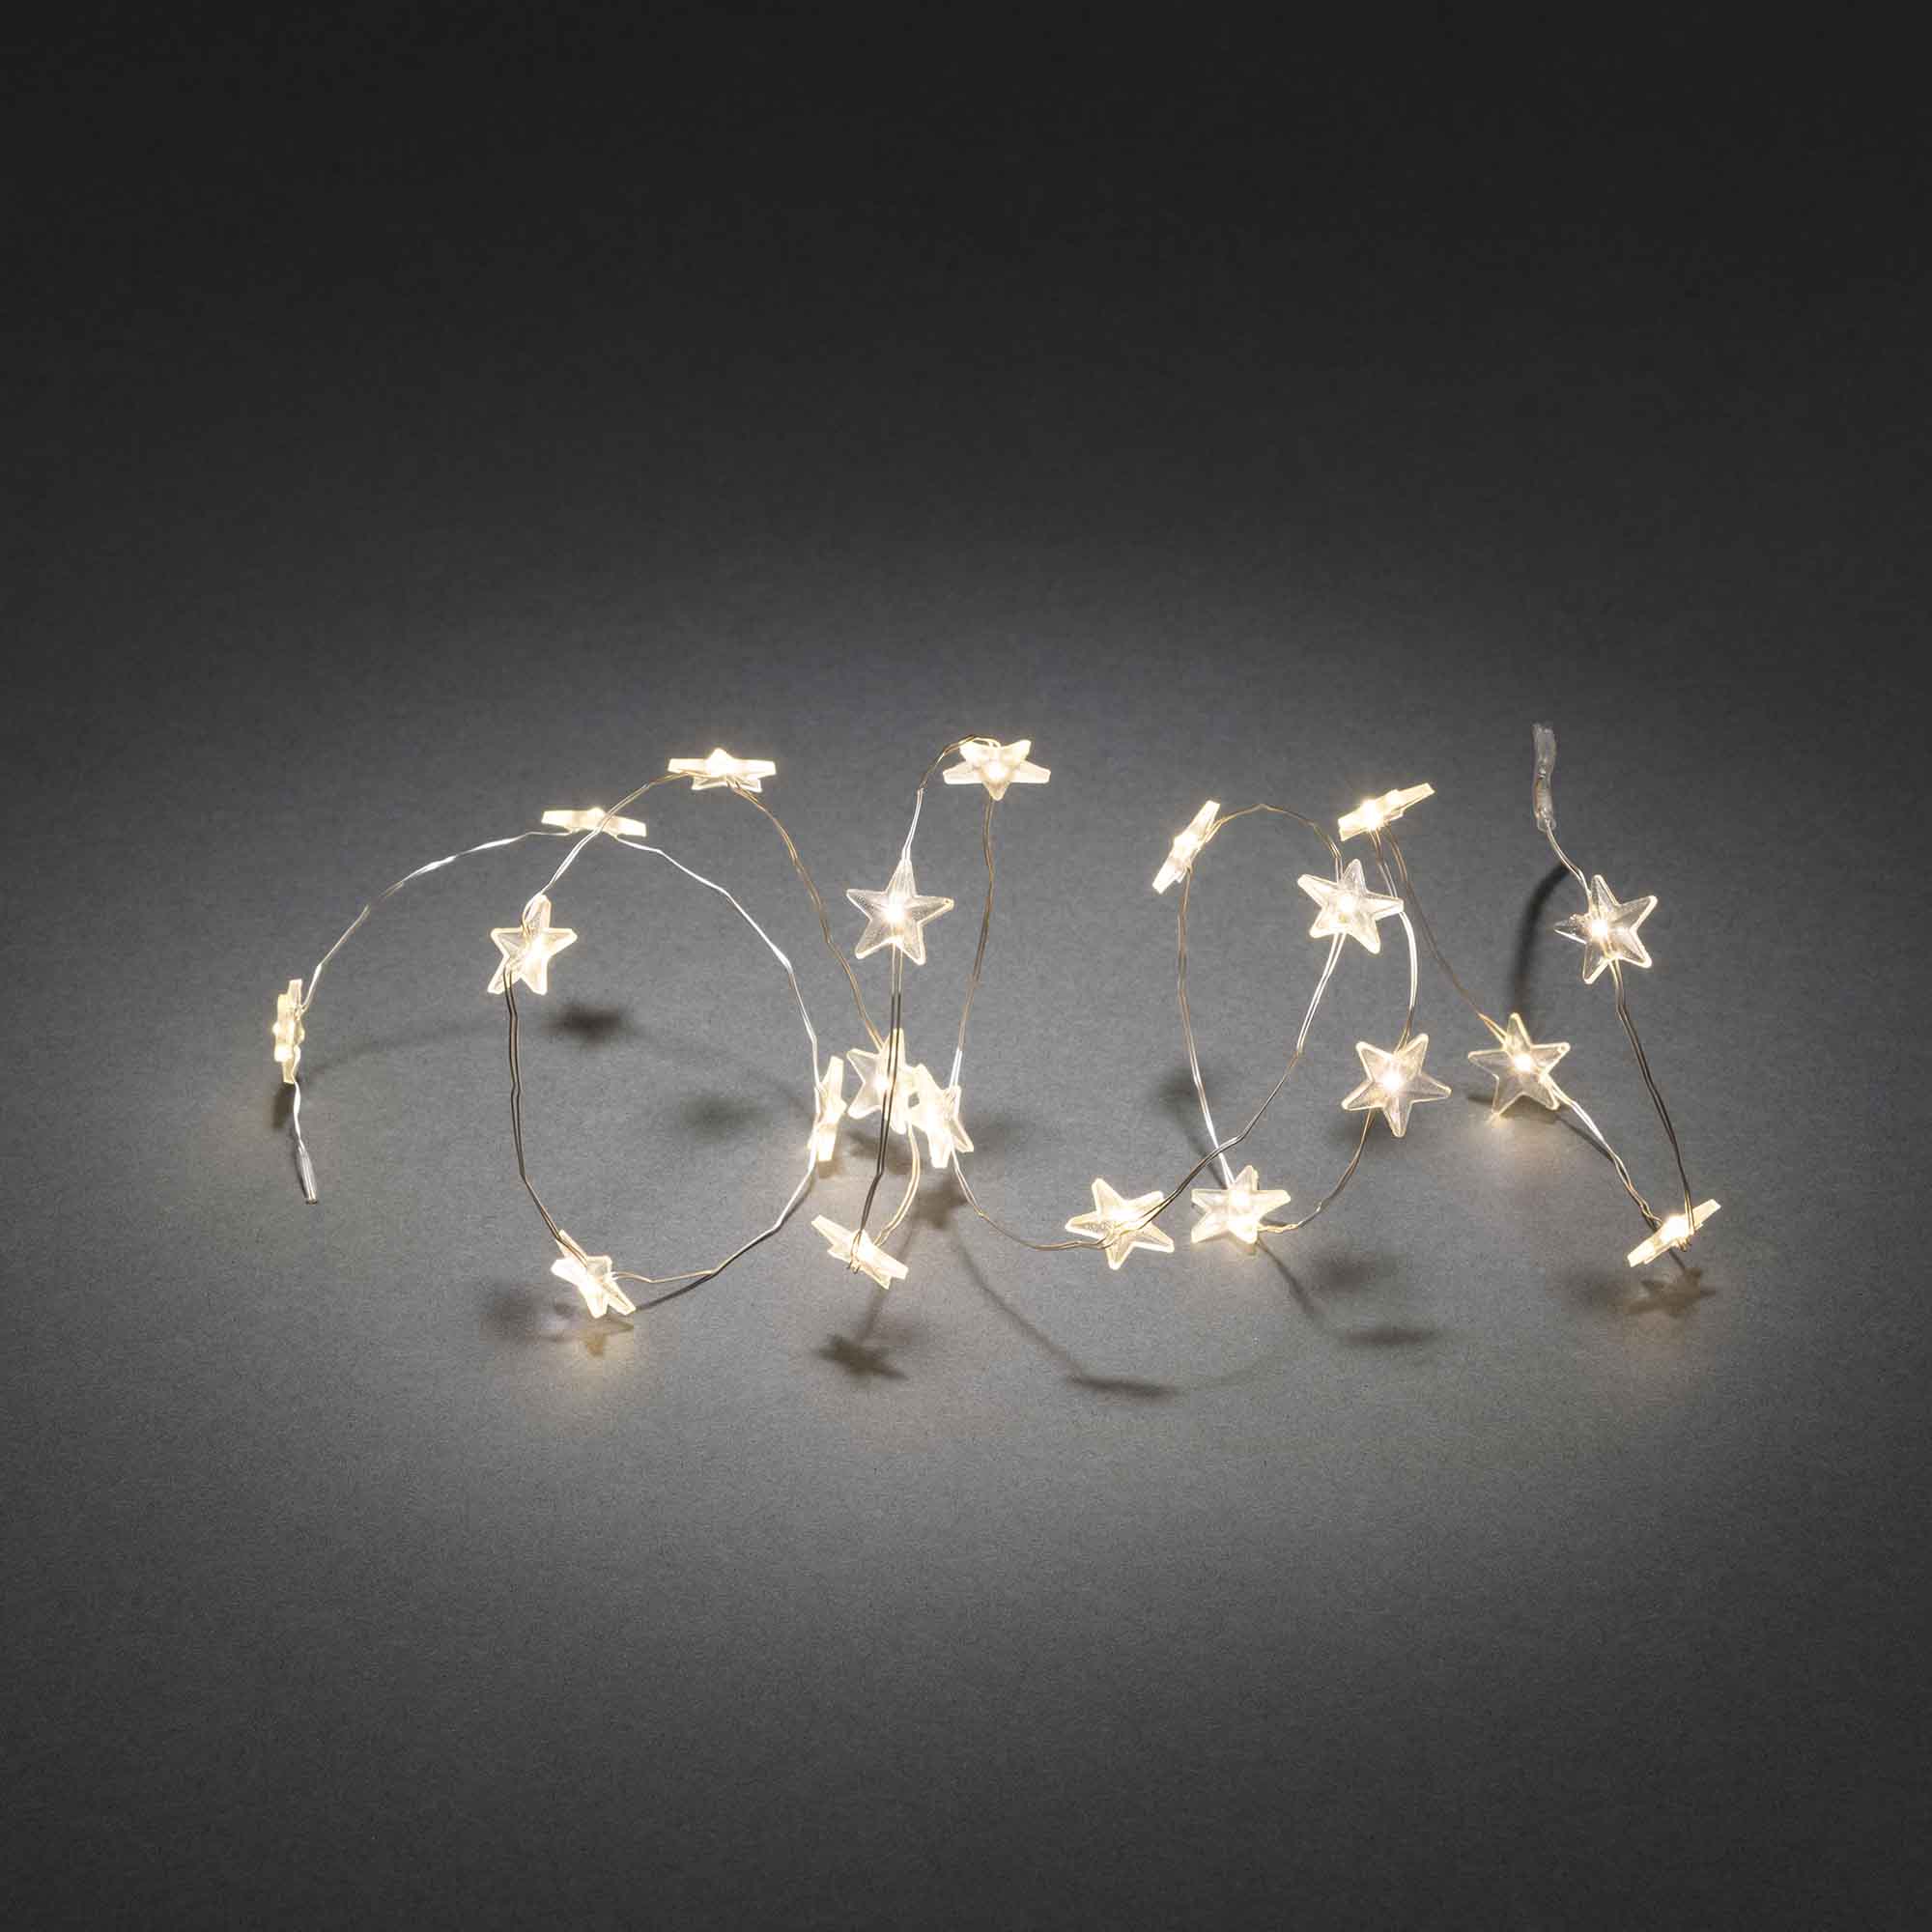 Decorative LED light set with 20 transparent stars